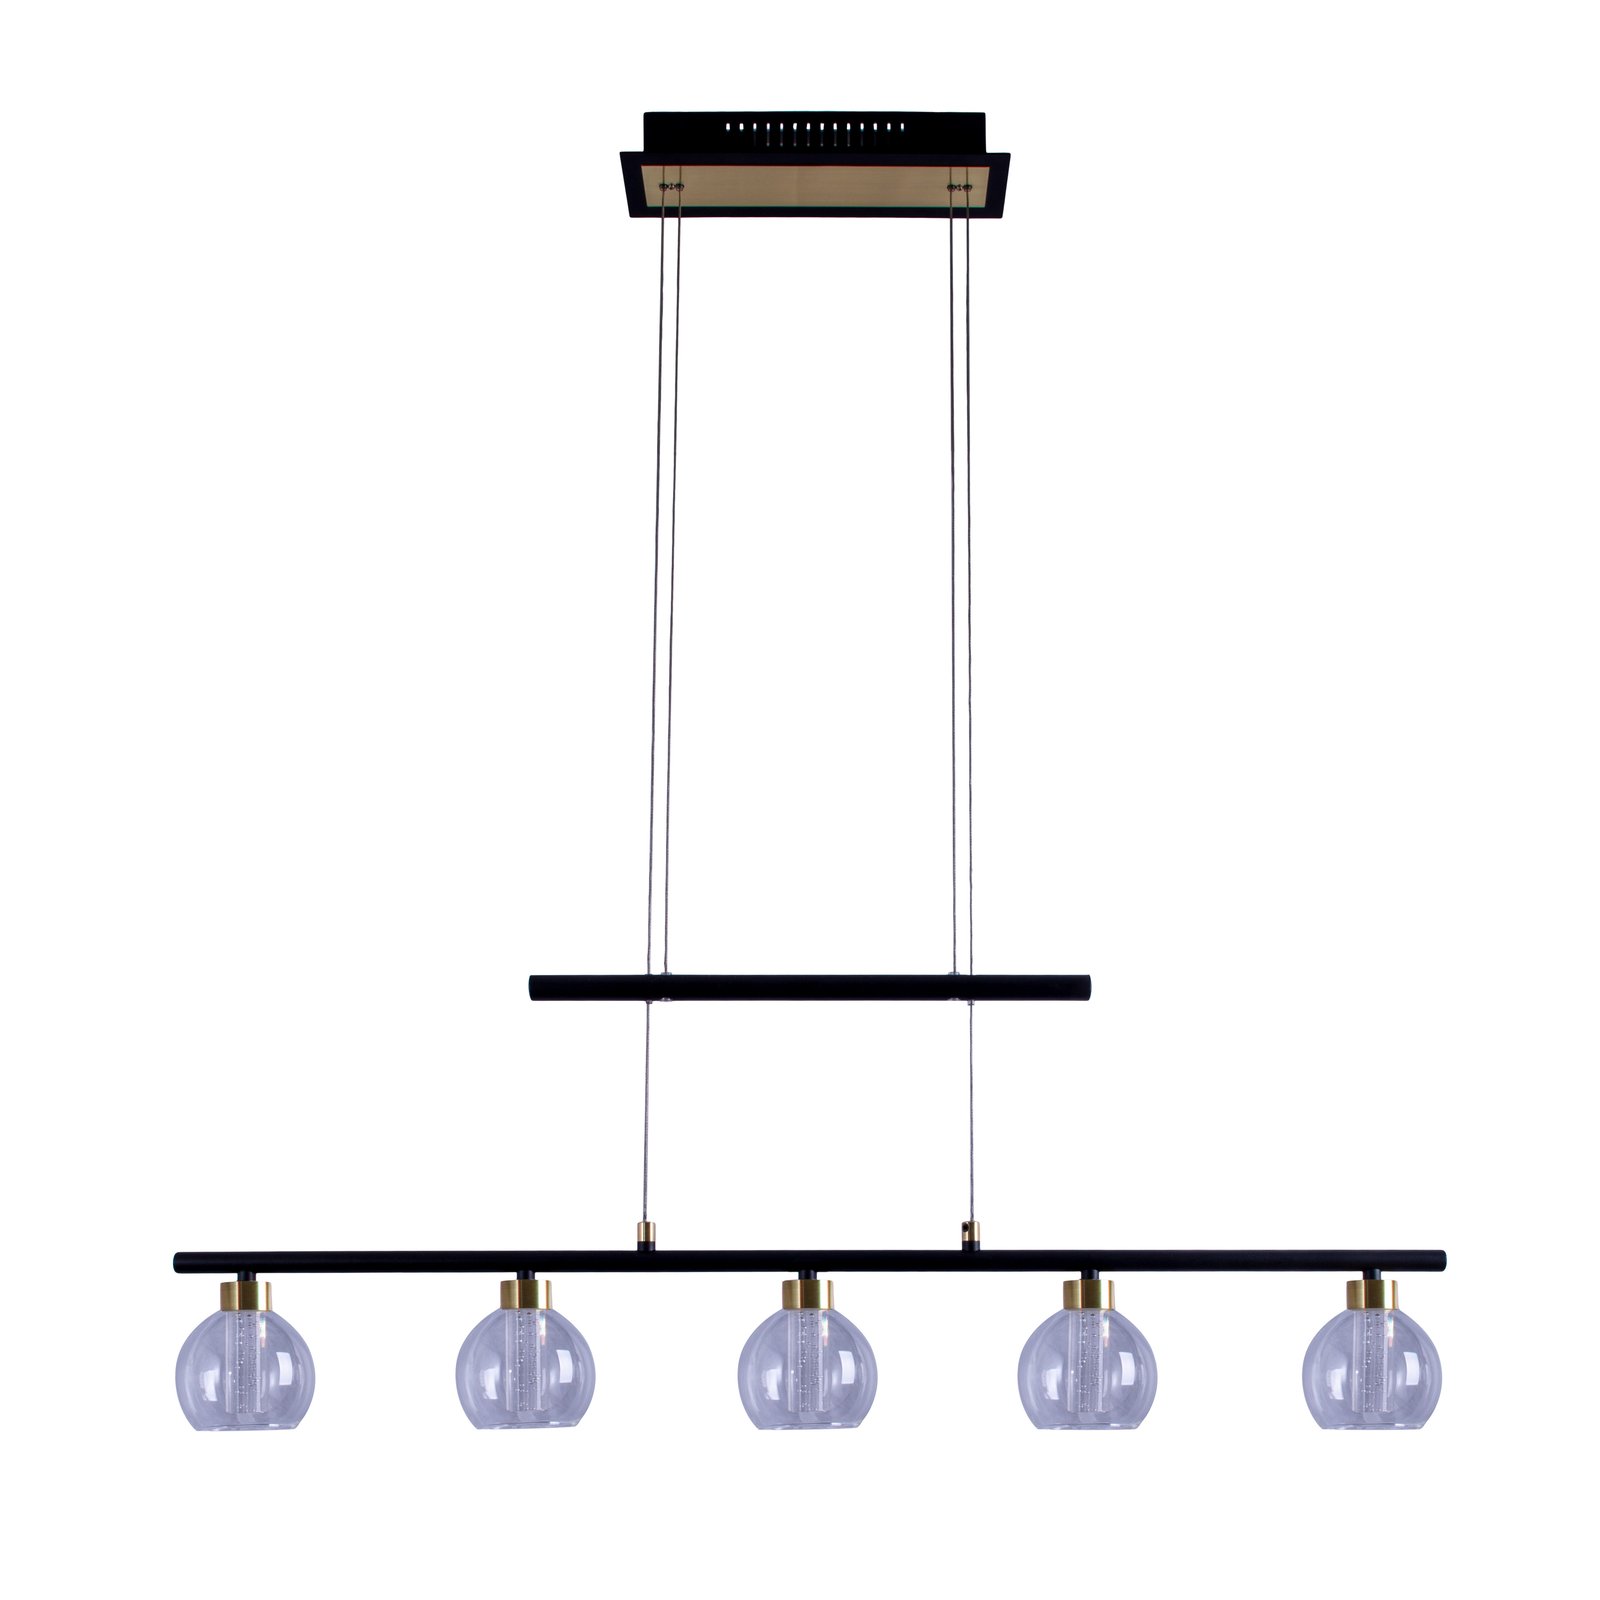 Brass LED pendant light 5-bulb height adjustable